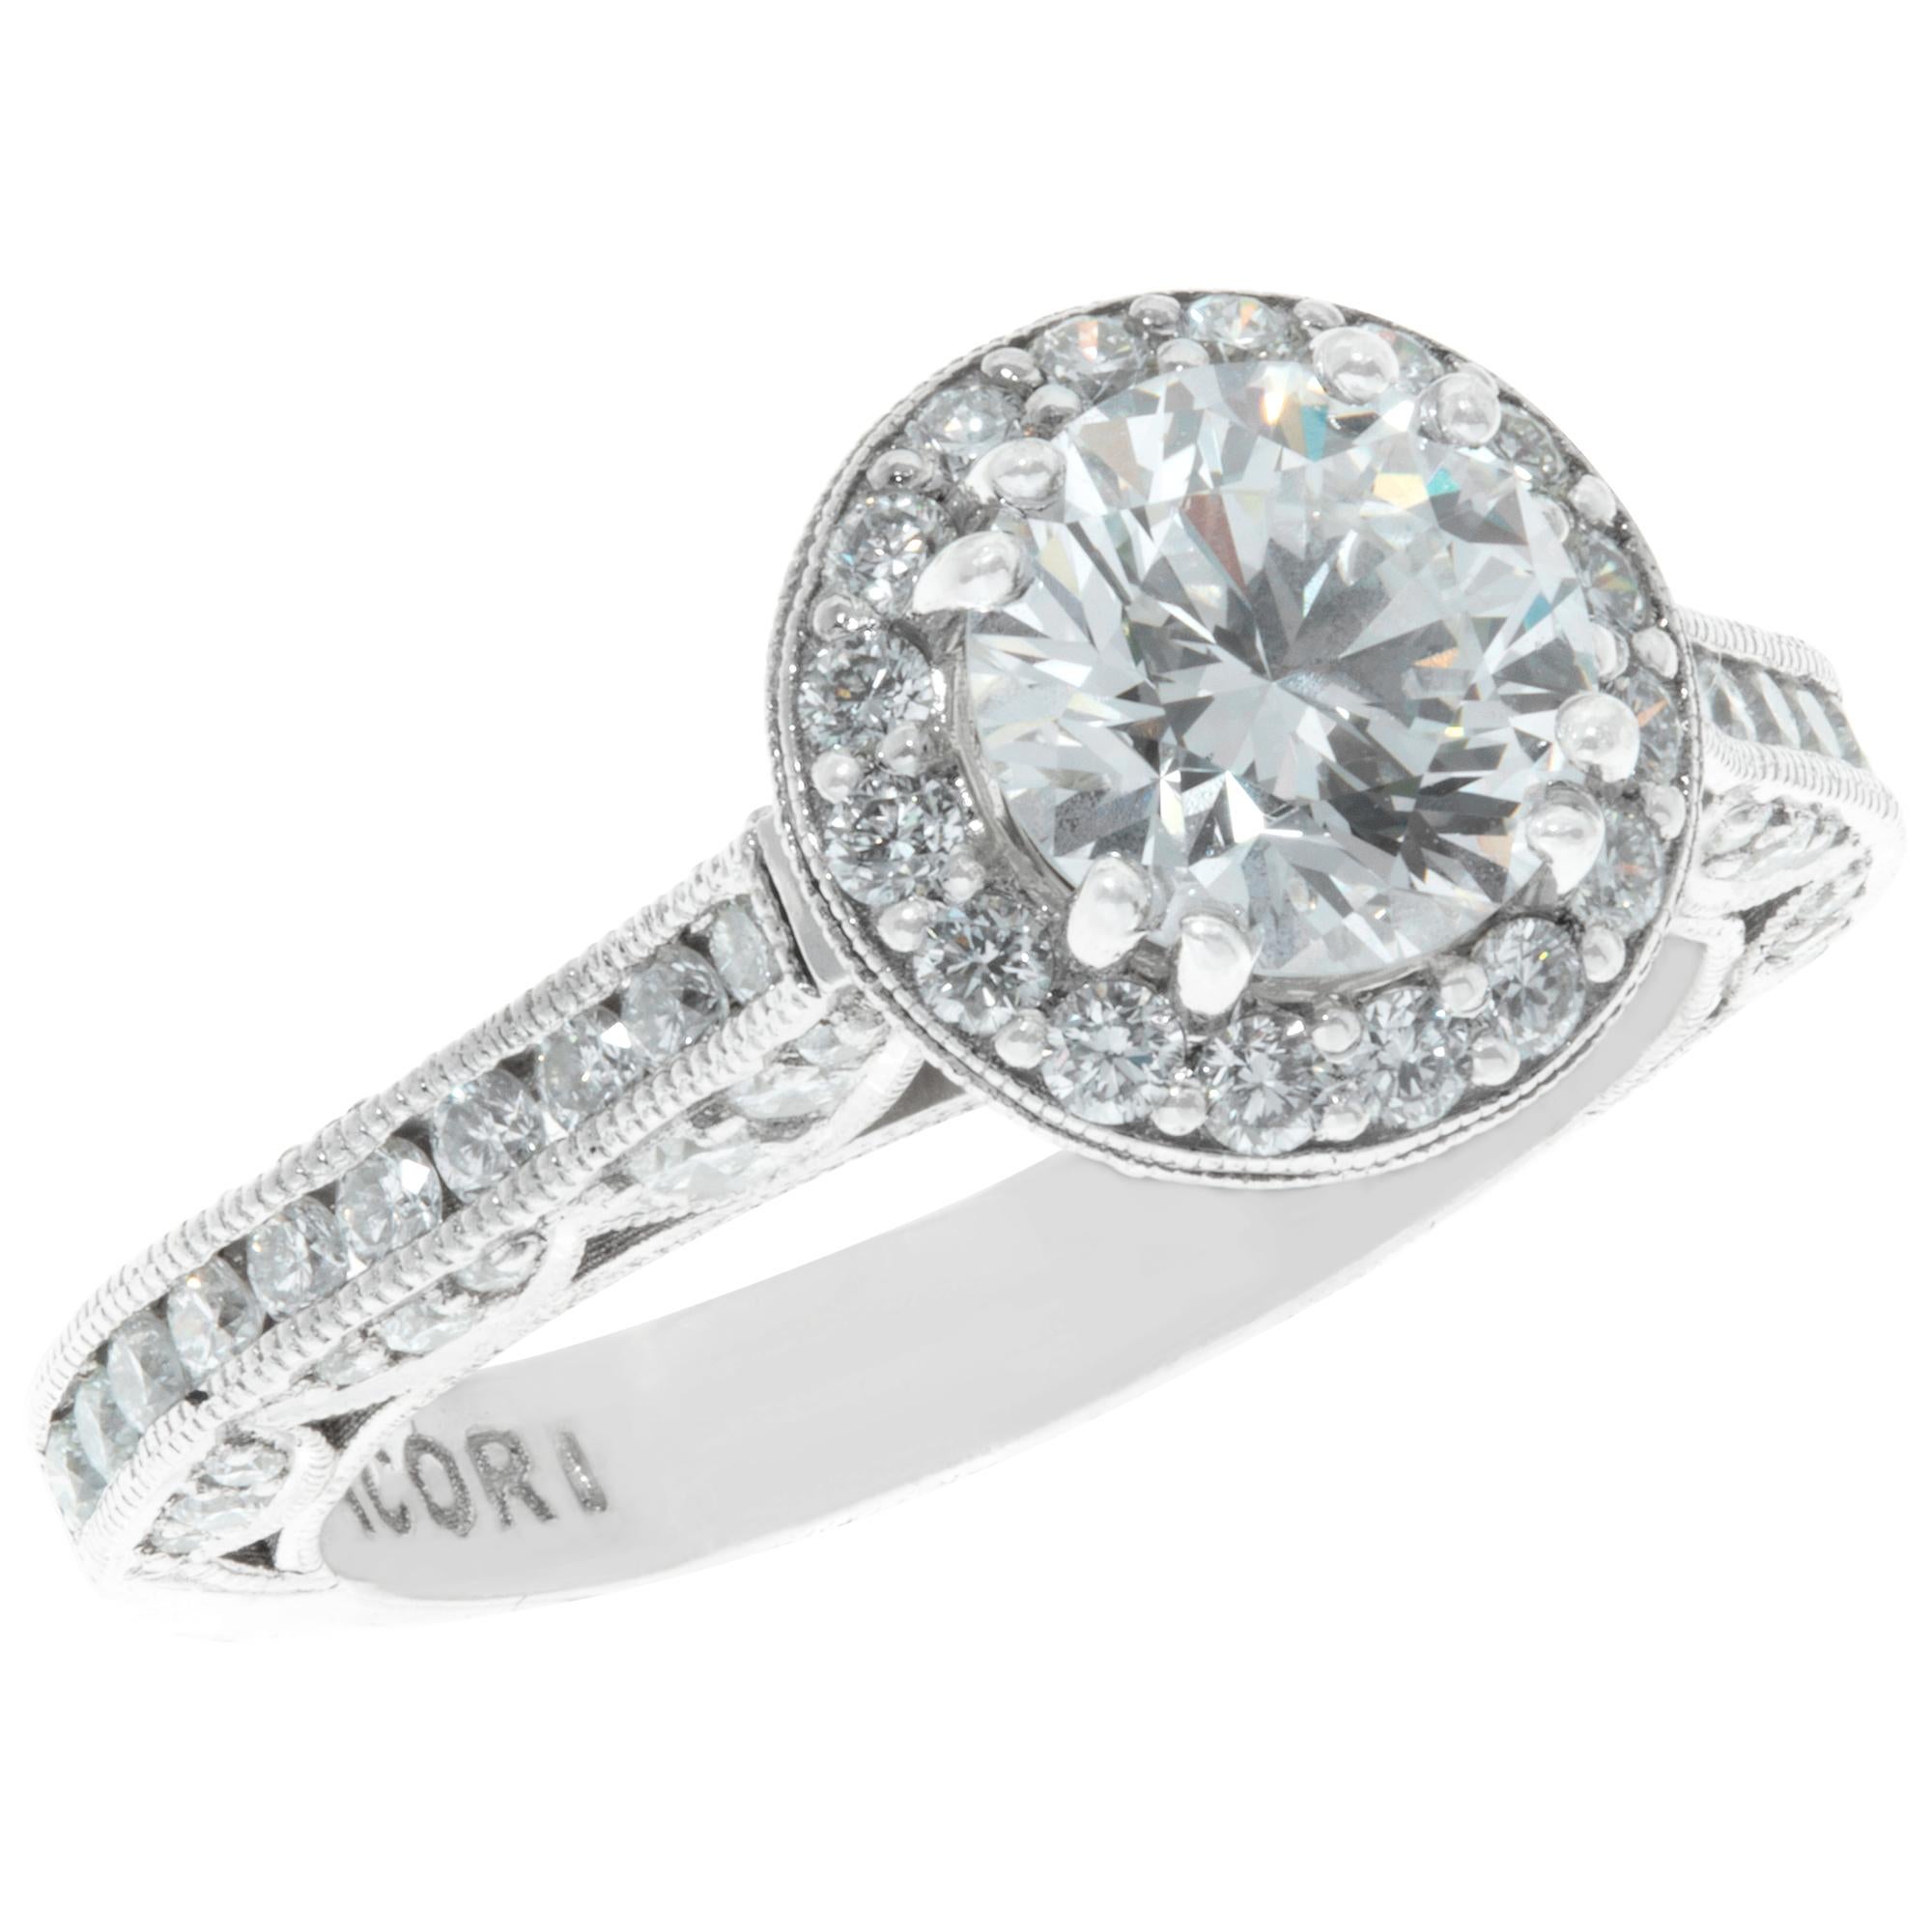 GIA certified round brilliant cut diamond 1.02 carat ring set in Tacori platinum In Excellent Condition For Sale In Surfside, FL